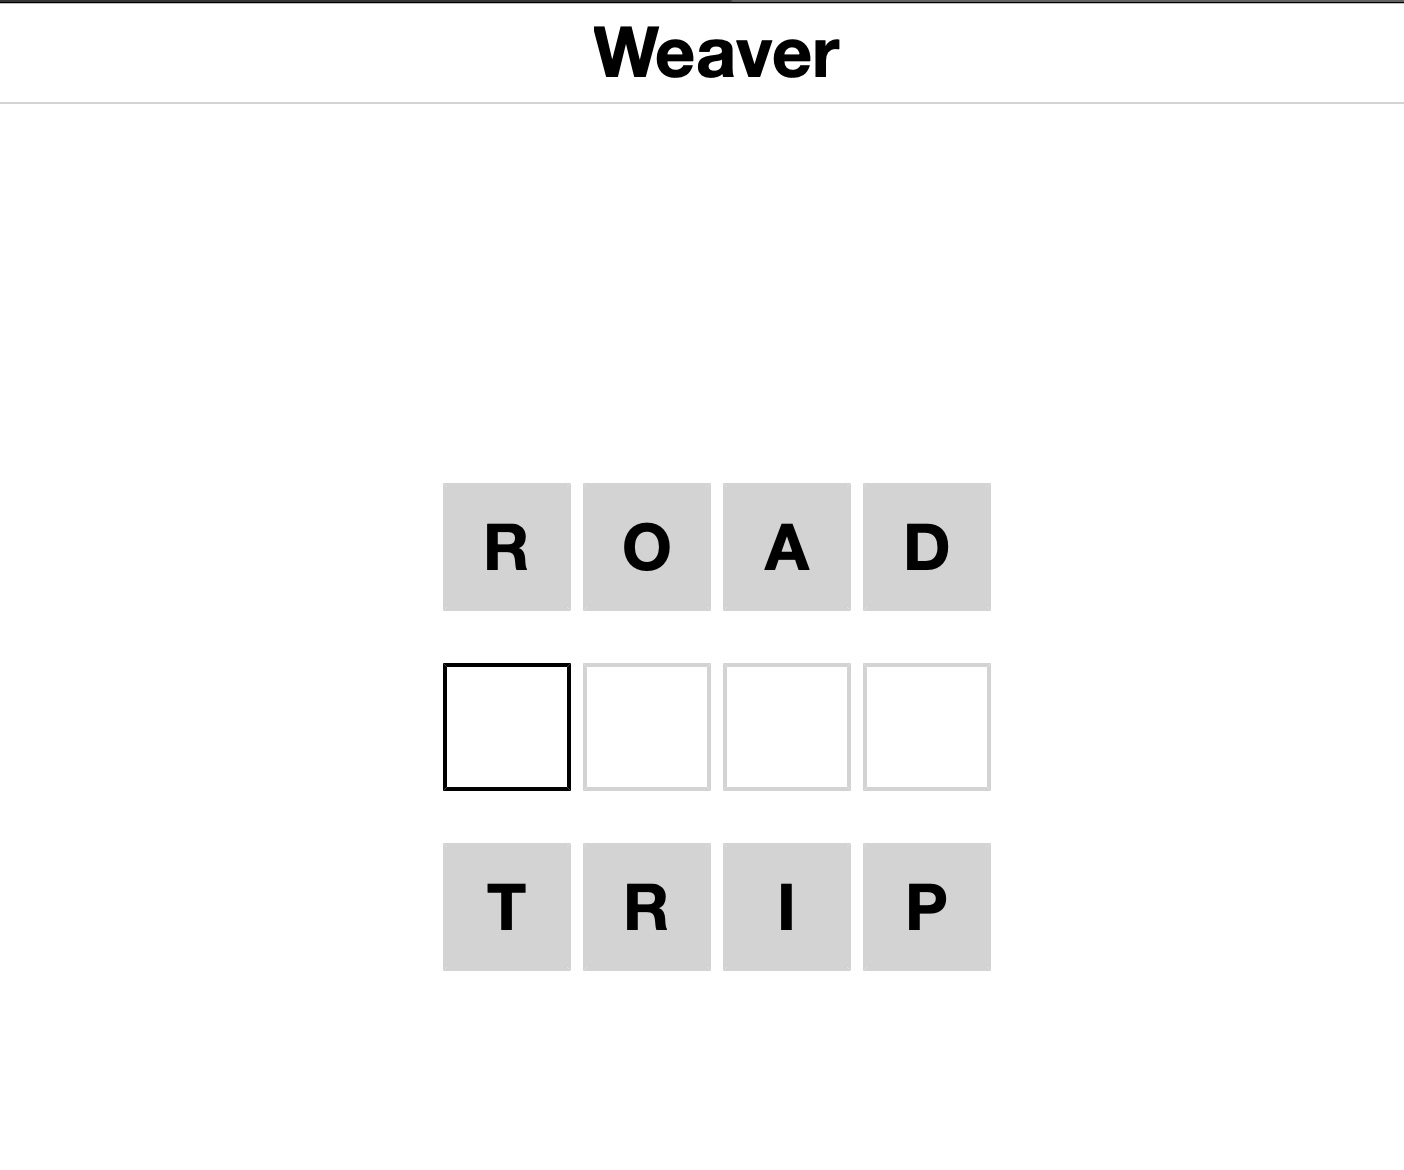 Weaver word game